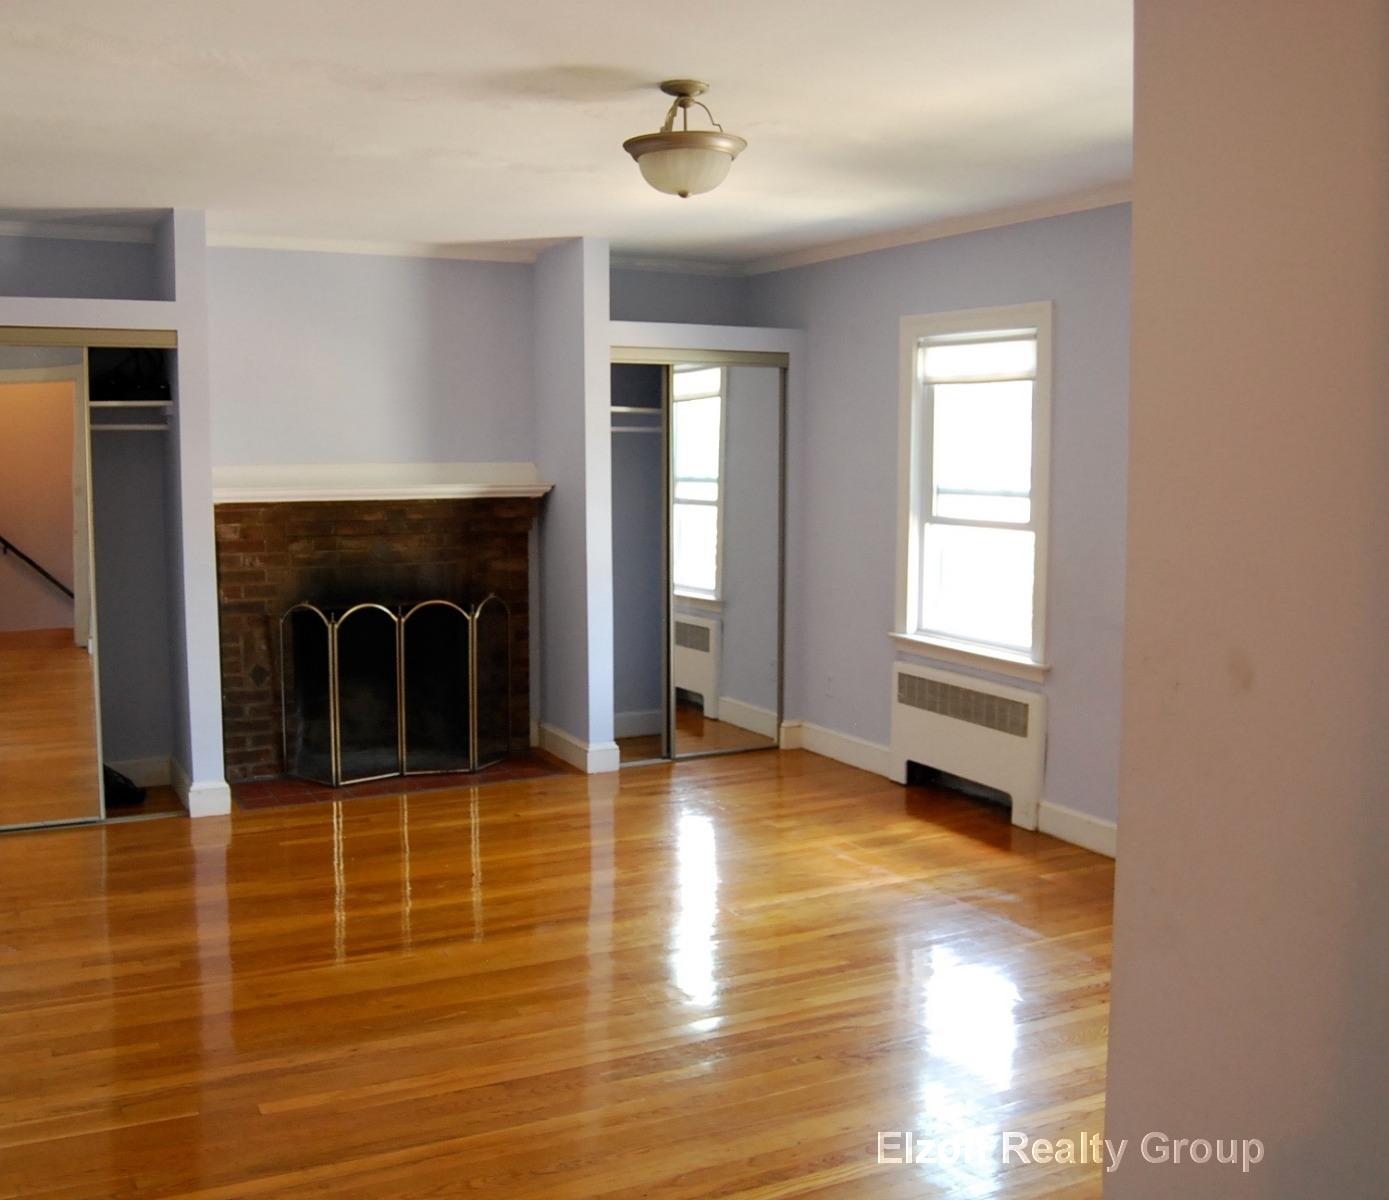 Photos of apartment on Undine,Boston MA 02135